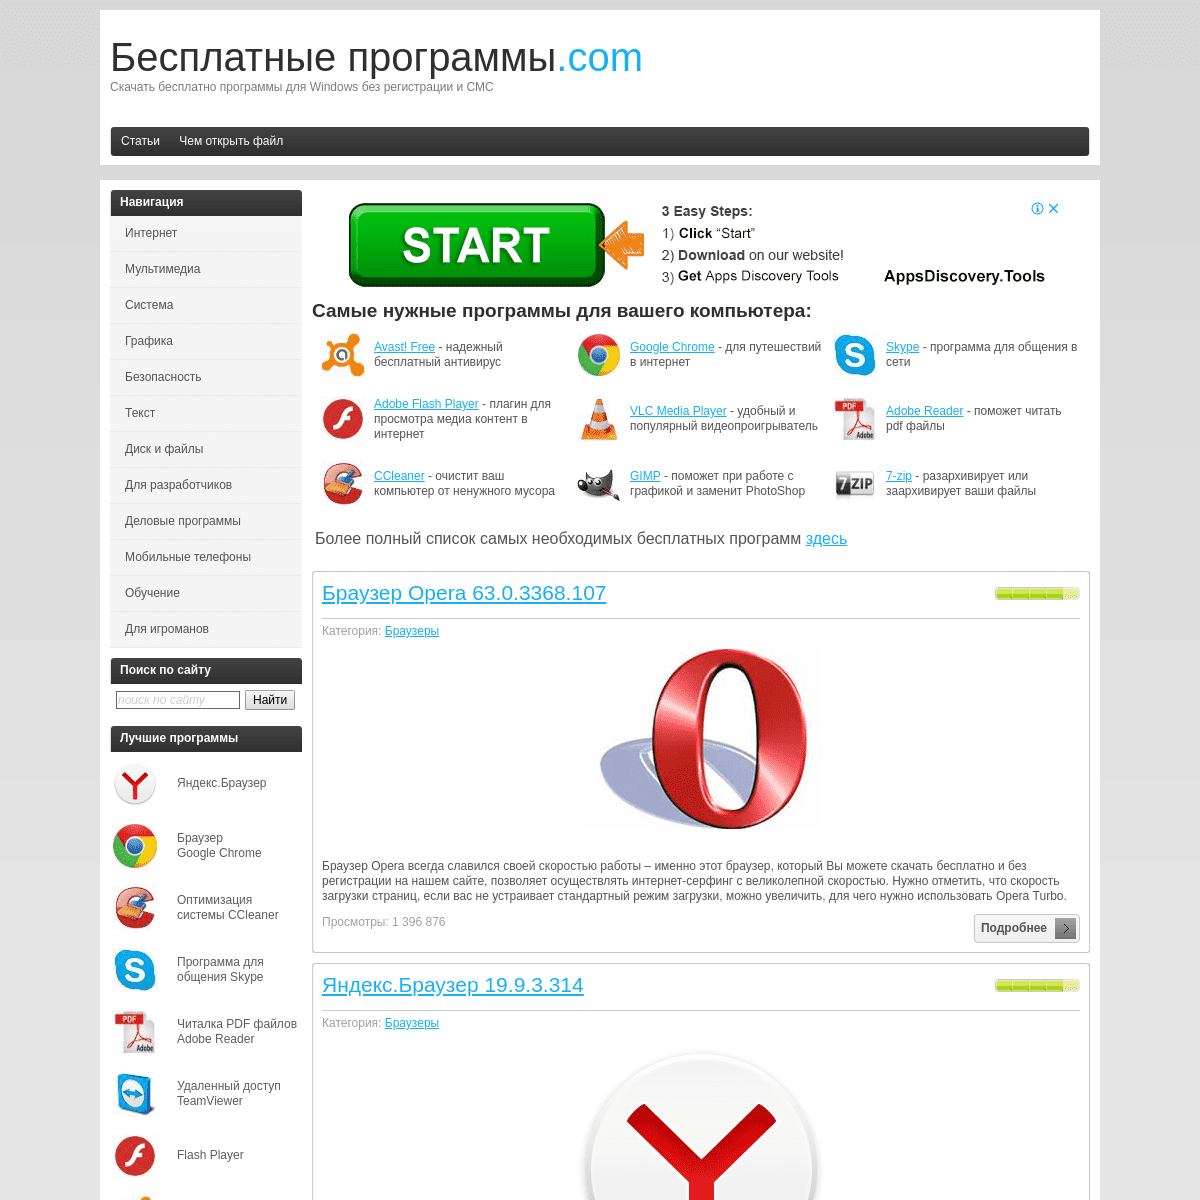 A complete backup of besplatnye-programmy.com